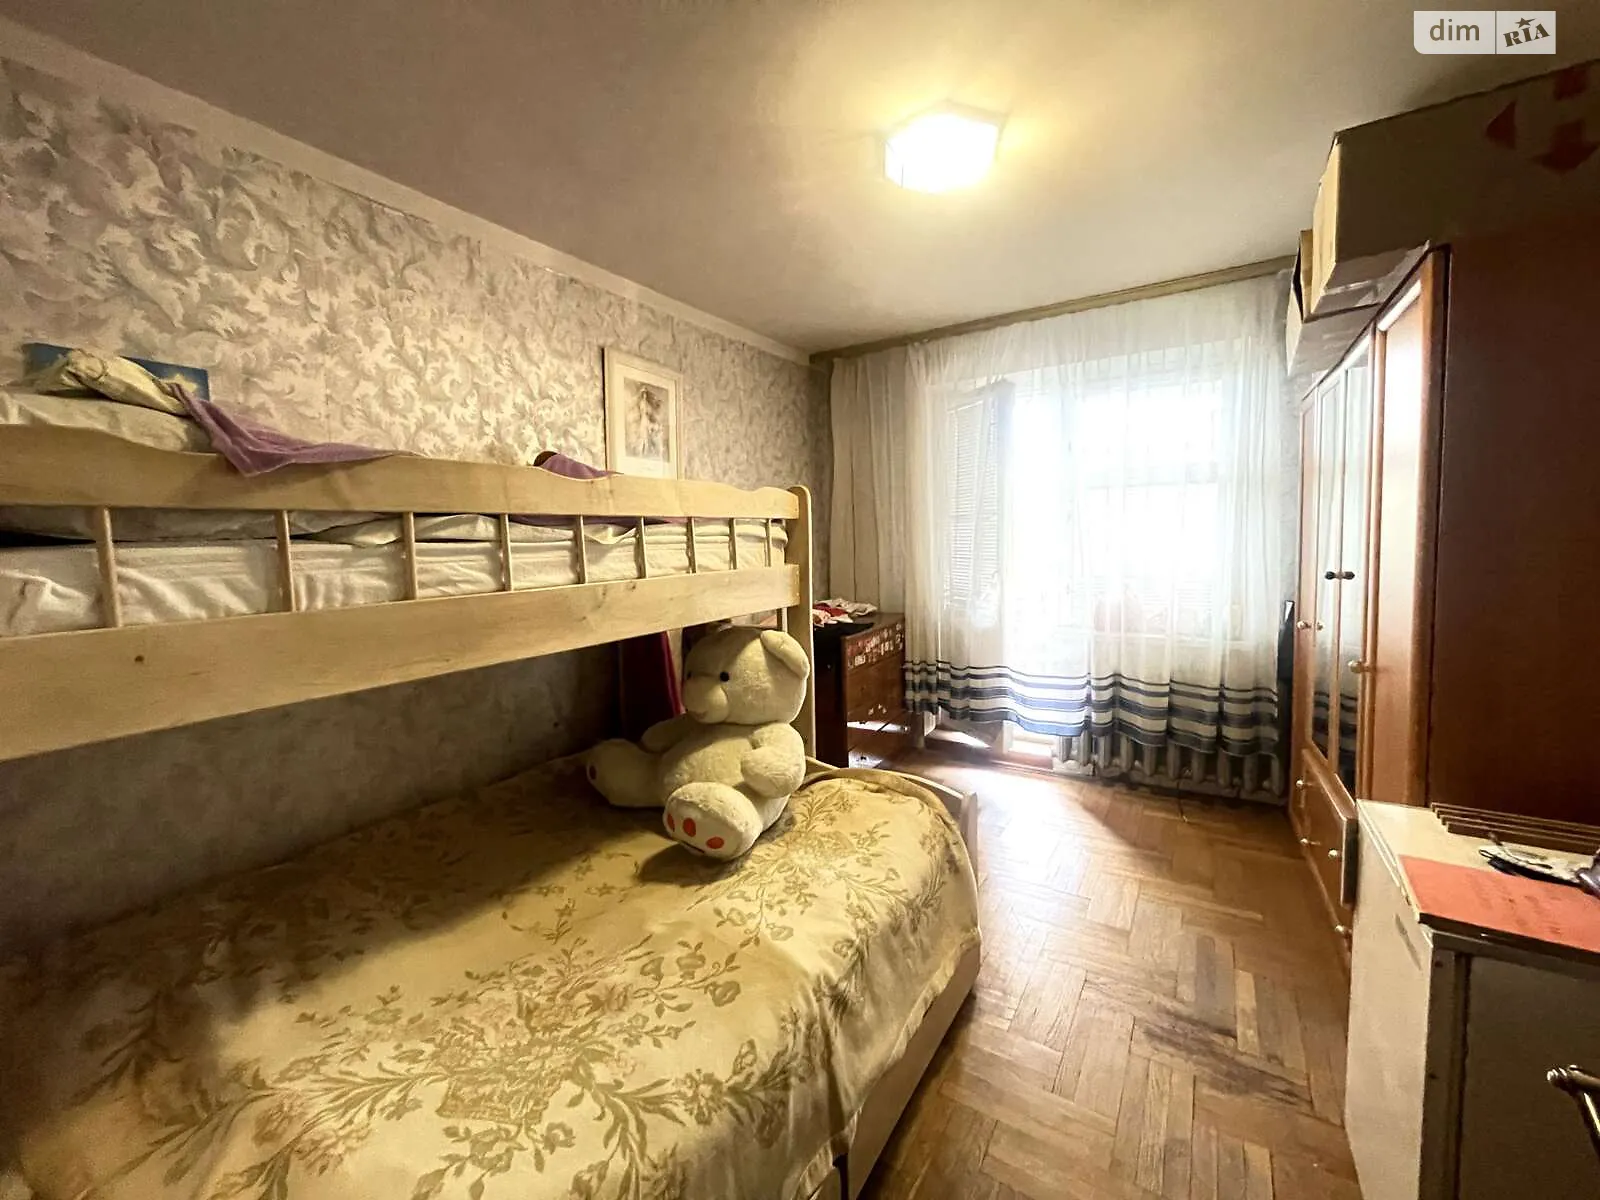 3-кімнатна квартира 66 кв. м у Луцьку, цена: 53000 $ - фото 1